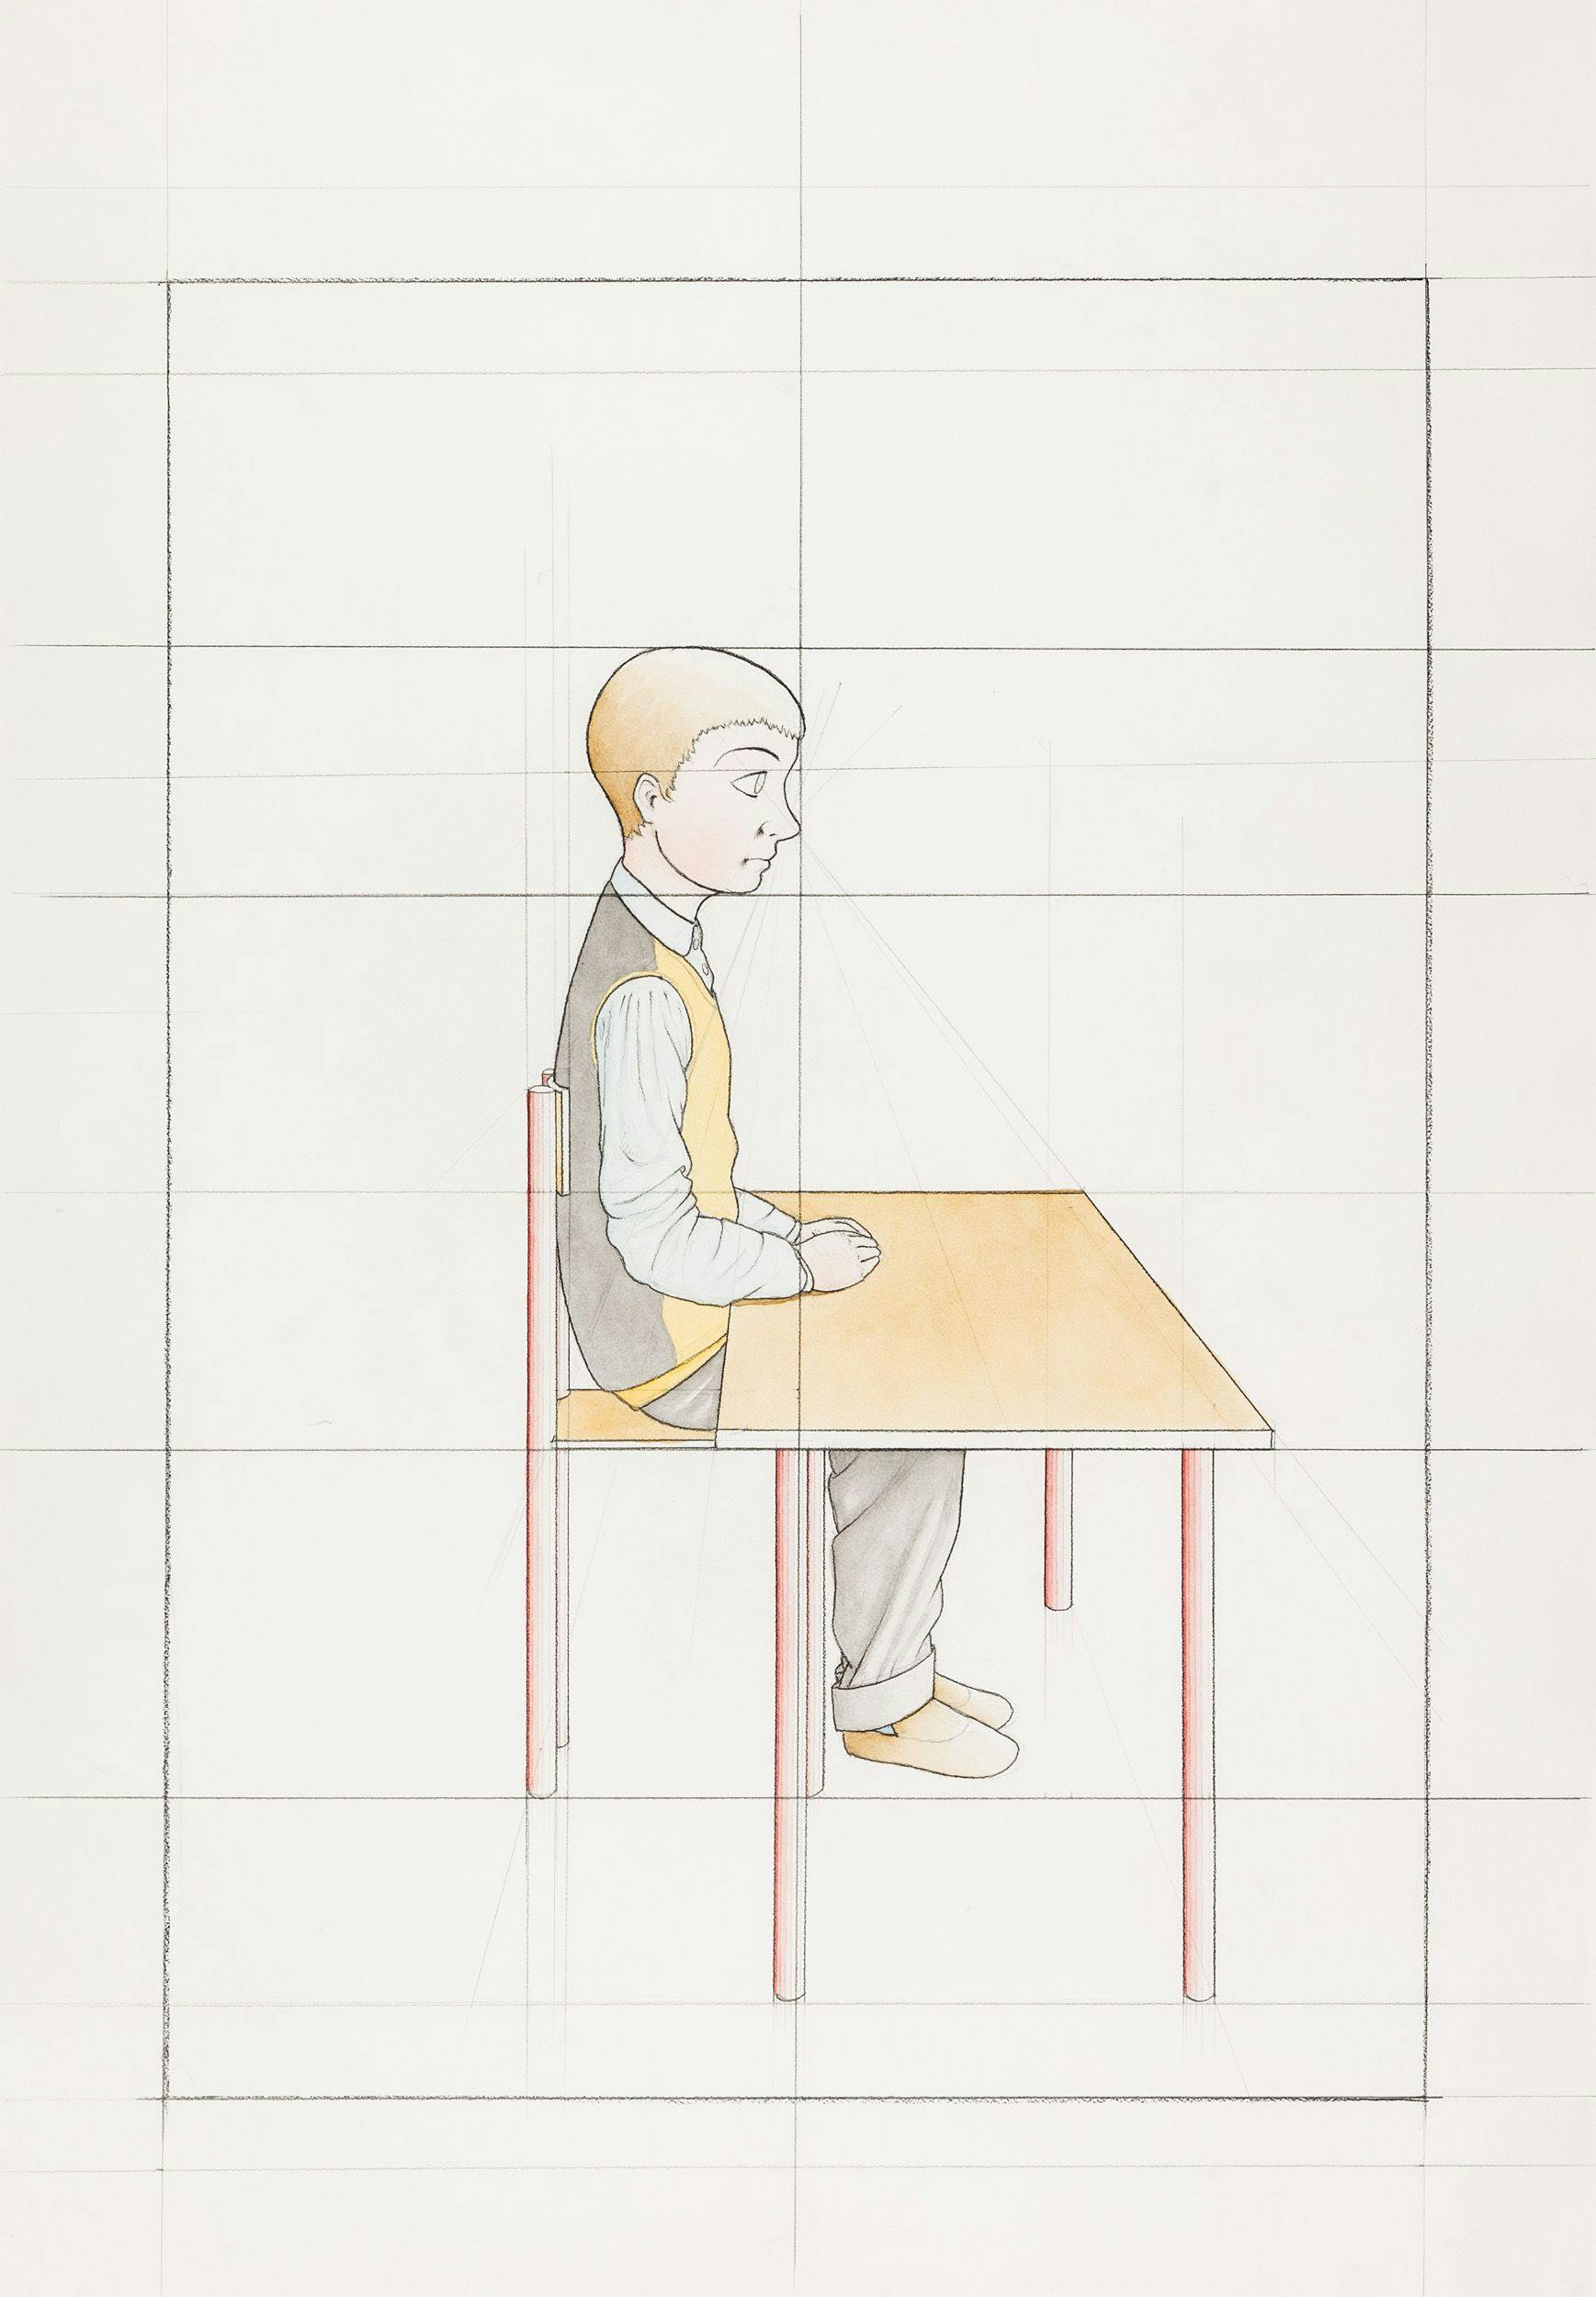 Konstverk: Peter Land, An Attempt to Reconstruct my Primary School Class from Memory (03) work in progress, 2012